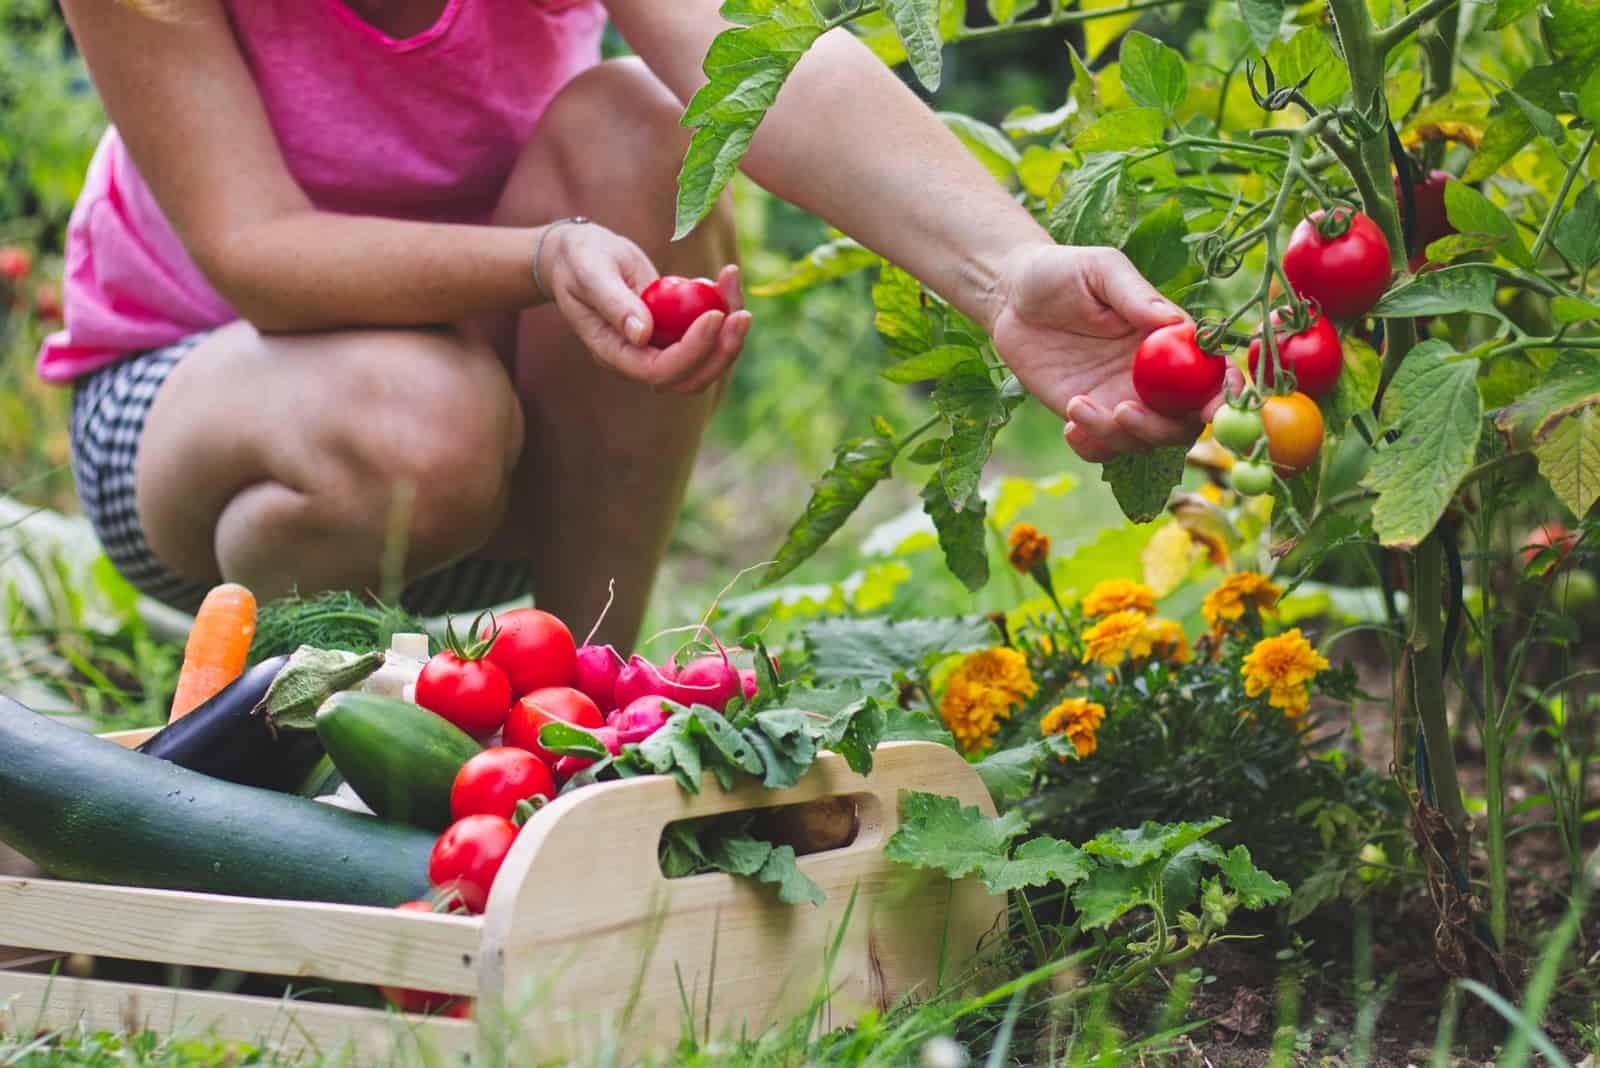 Woman harvesting fresh tomatoes in her organic garden